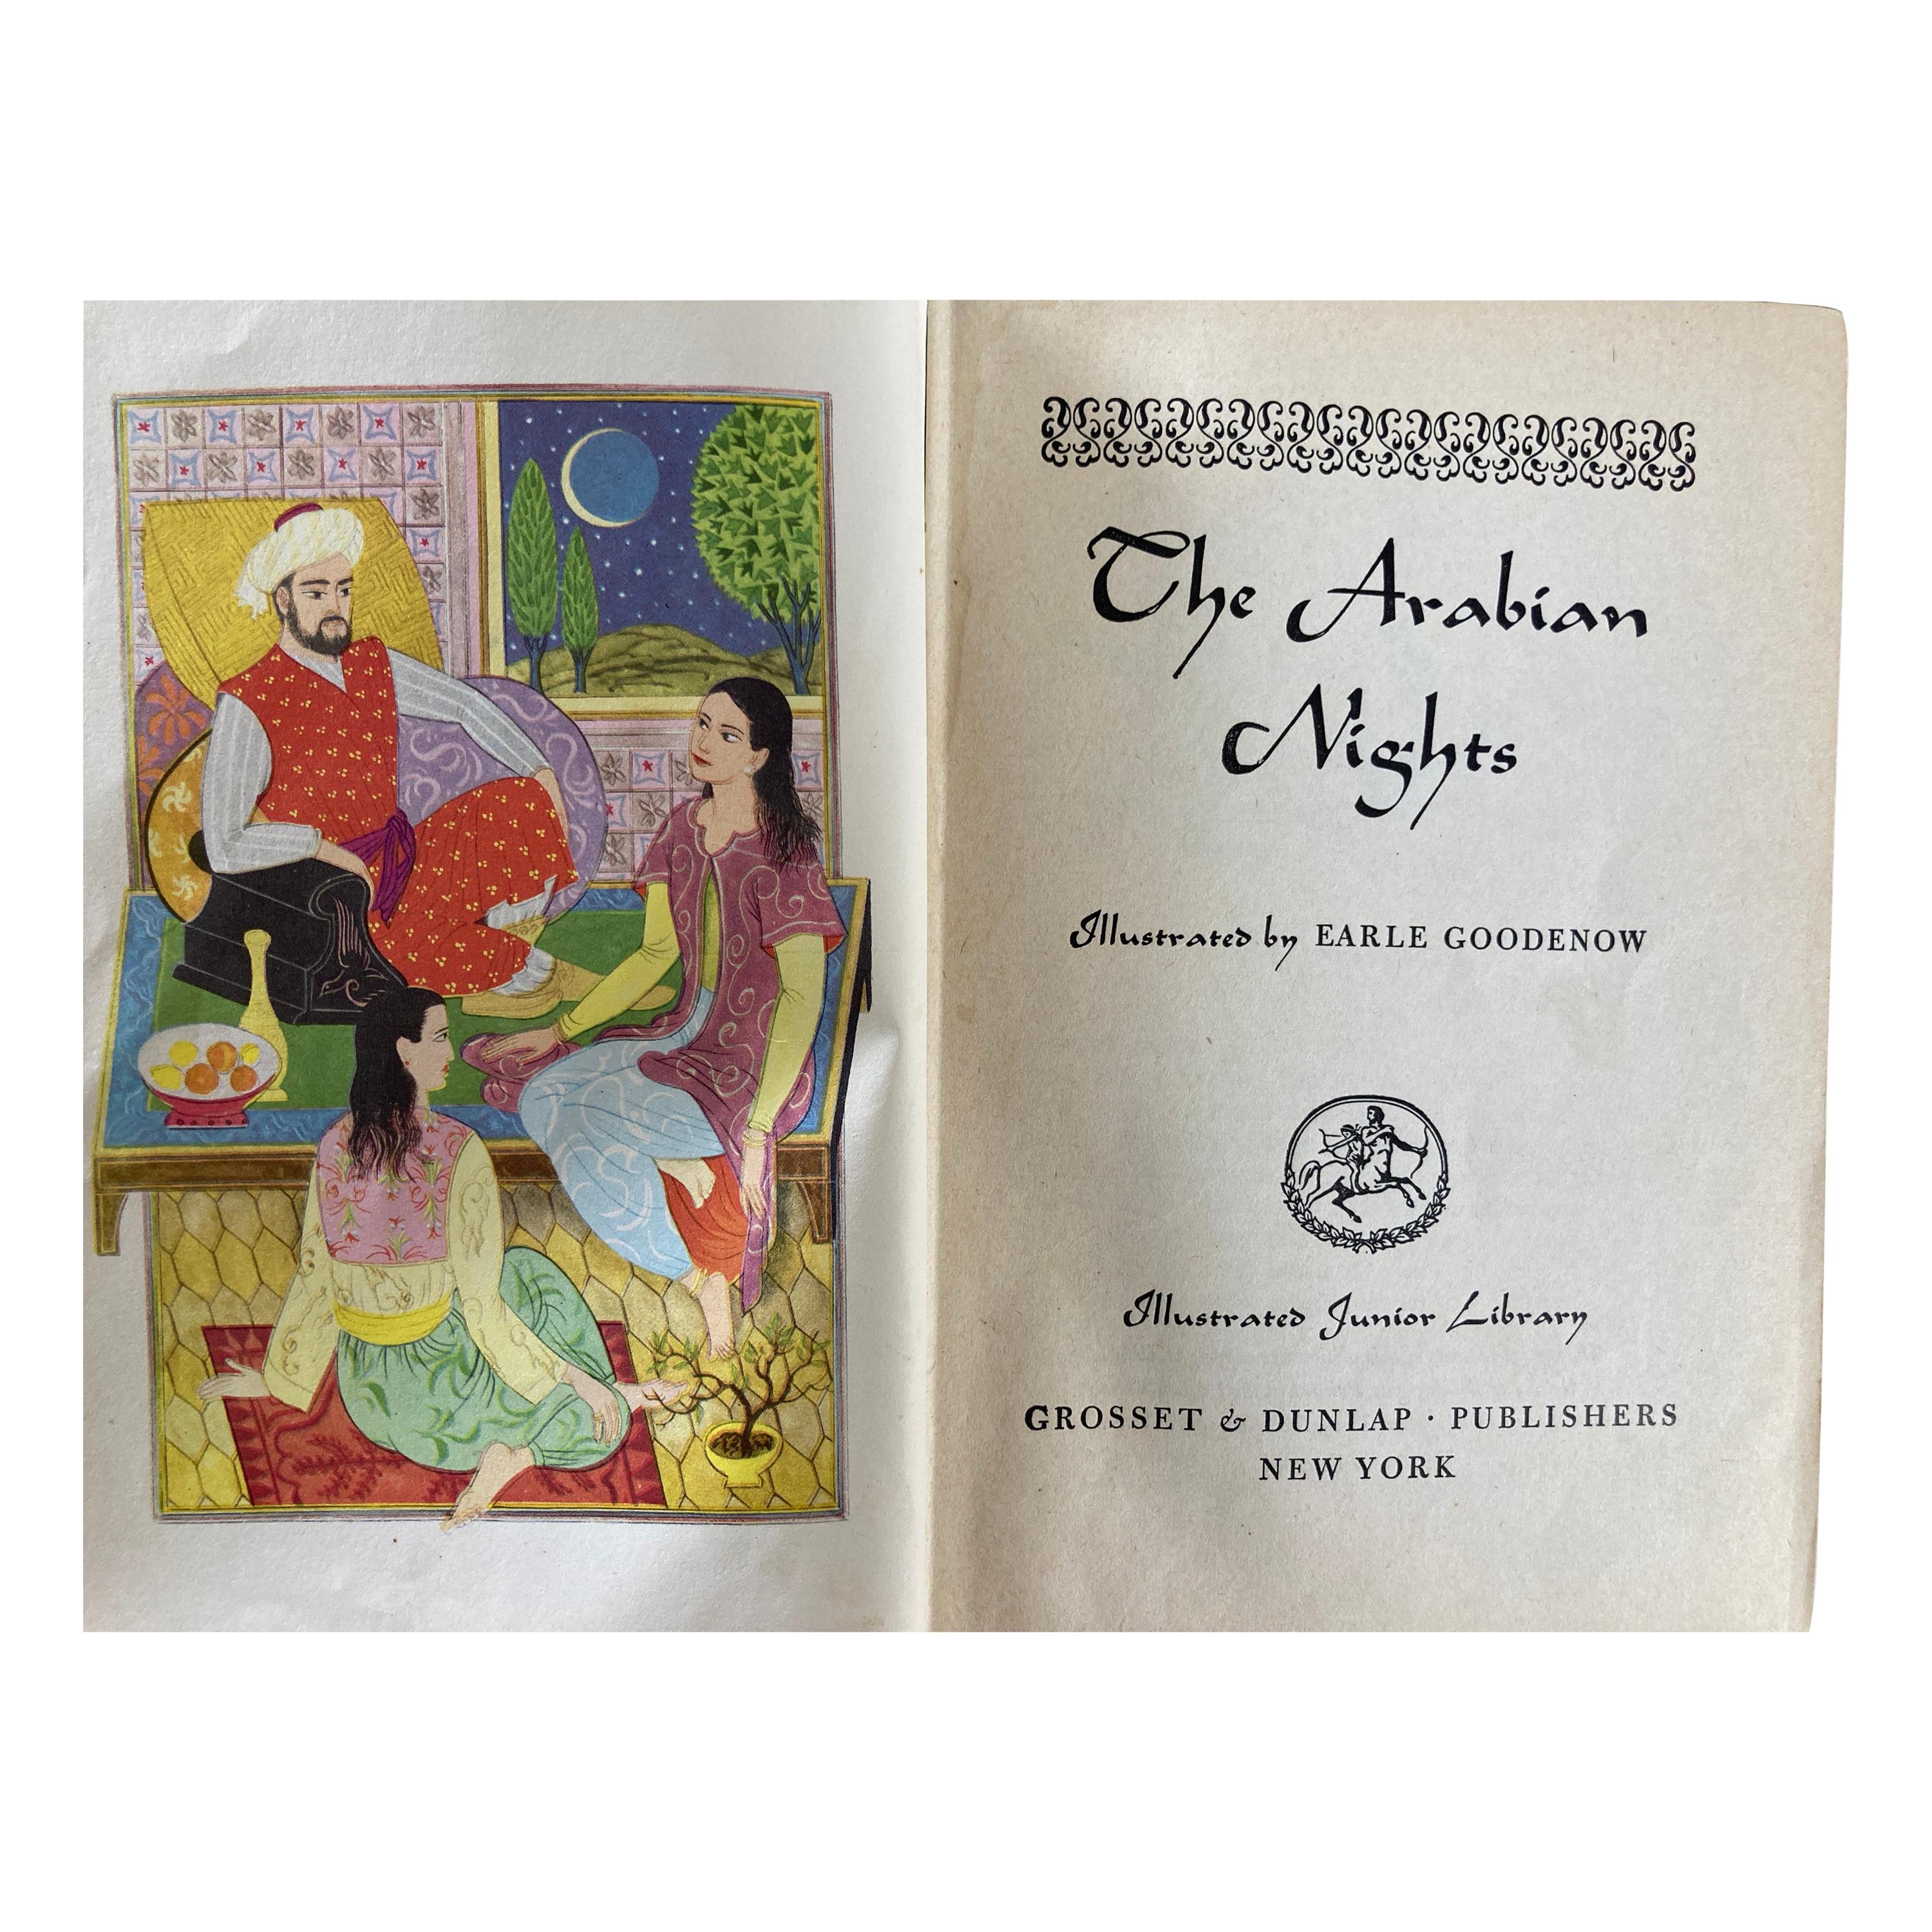 The Arabian Nights Grosset & Dunlap Illustrated Junior Library, 1946 1st Ed.